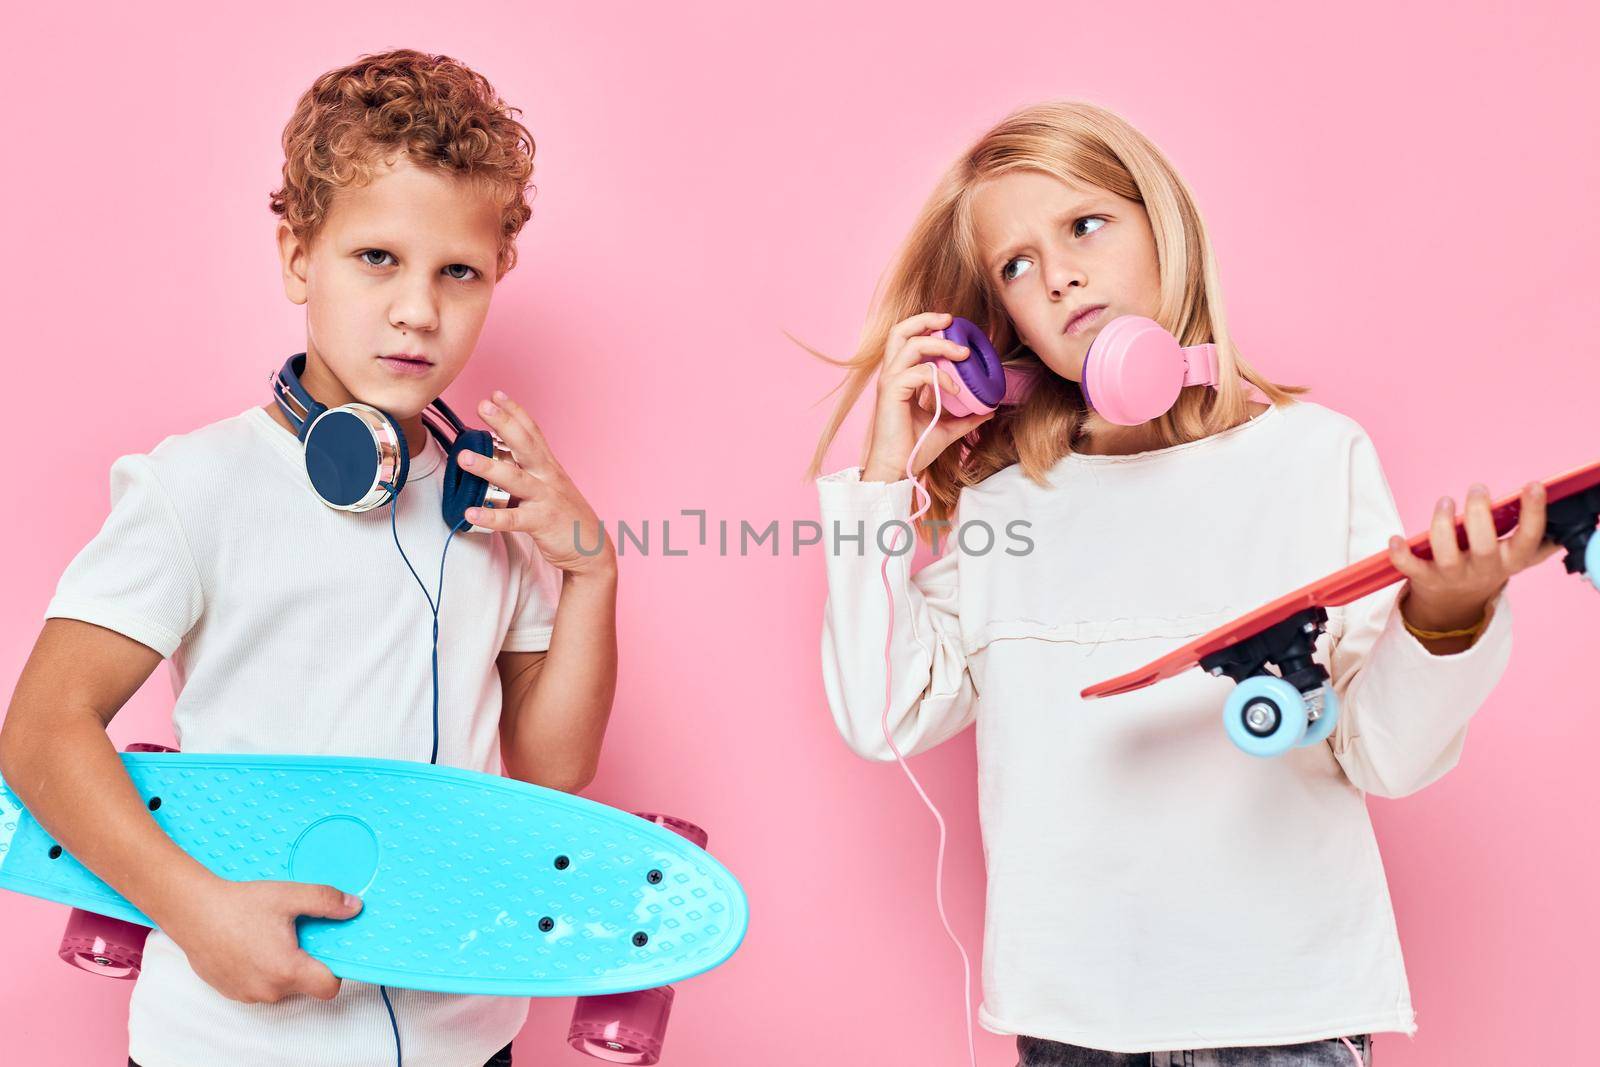 Funny children in headphones skateboards in hands pink color background by SHOTPRIME